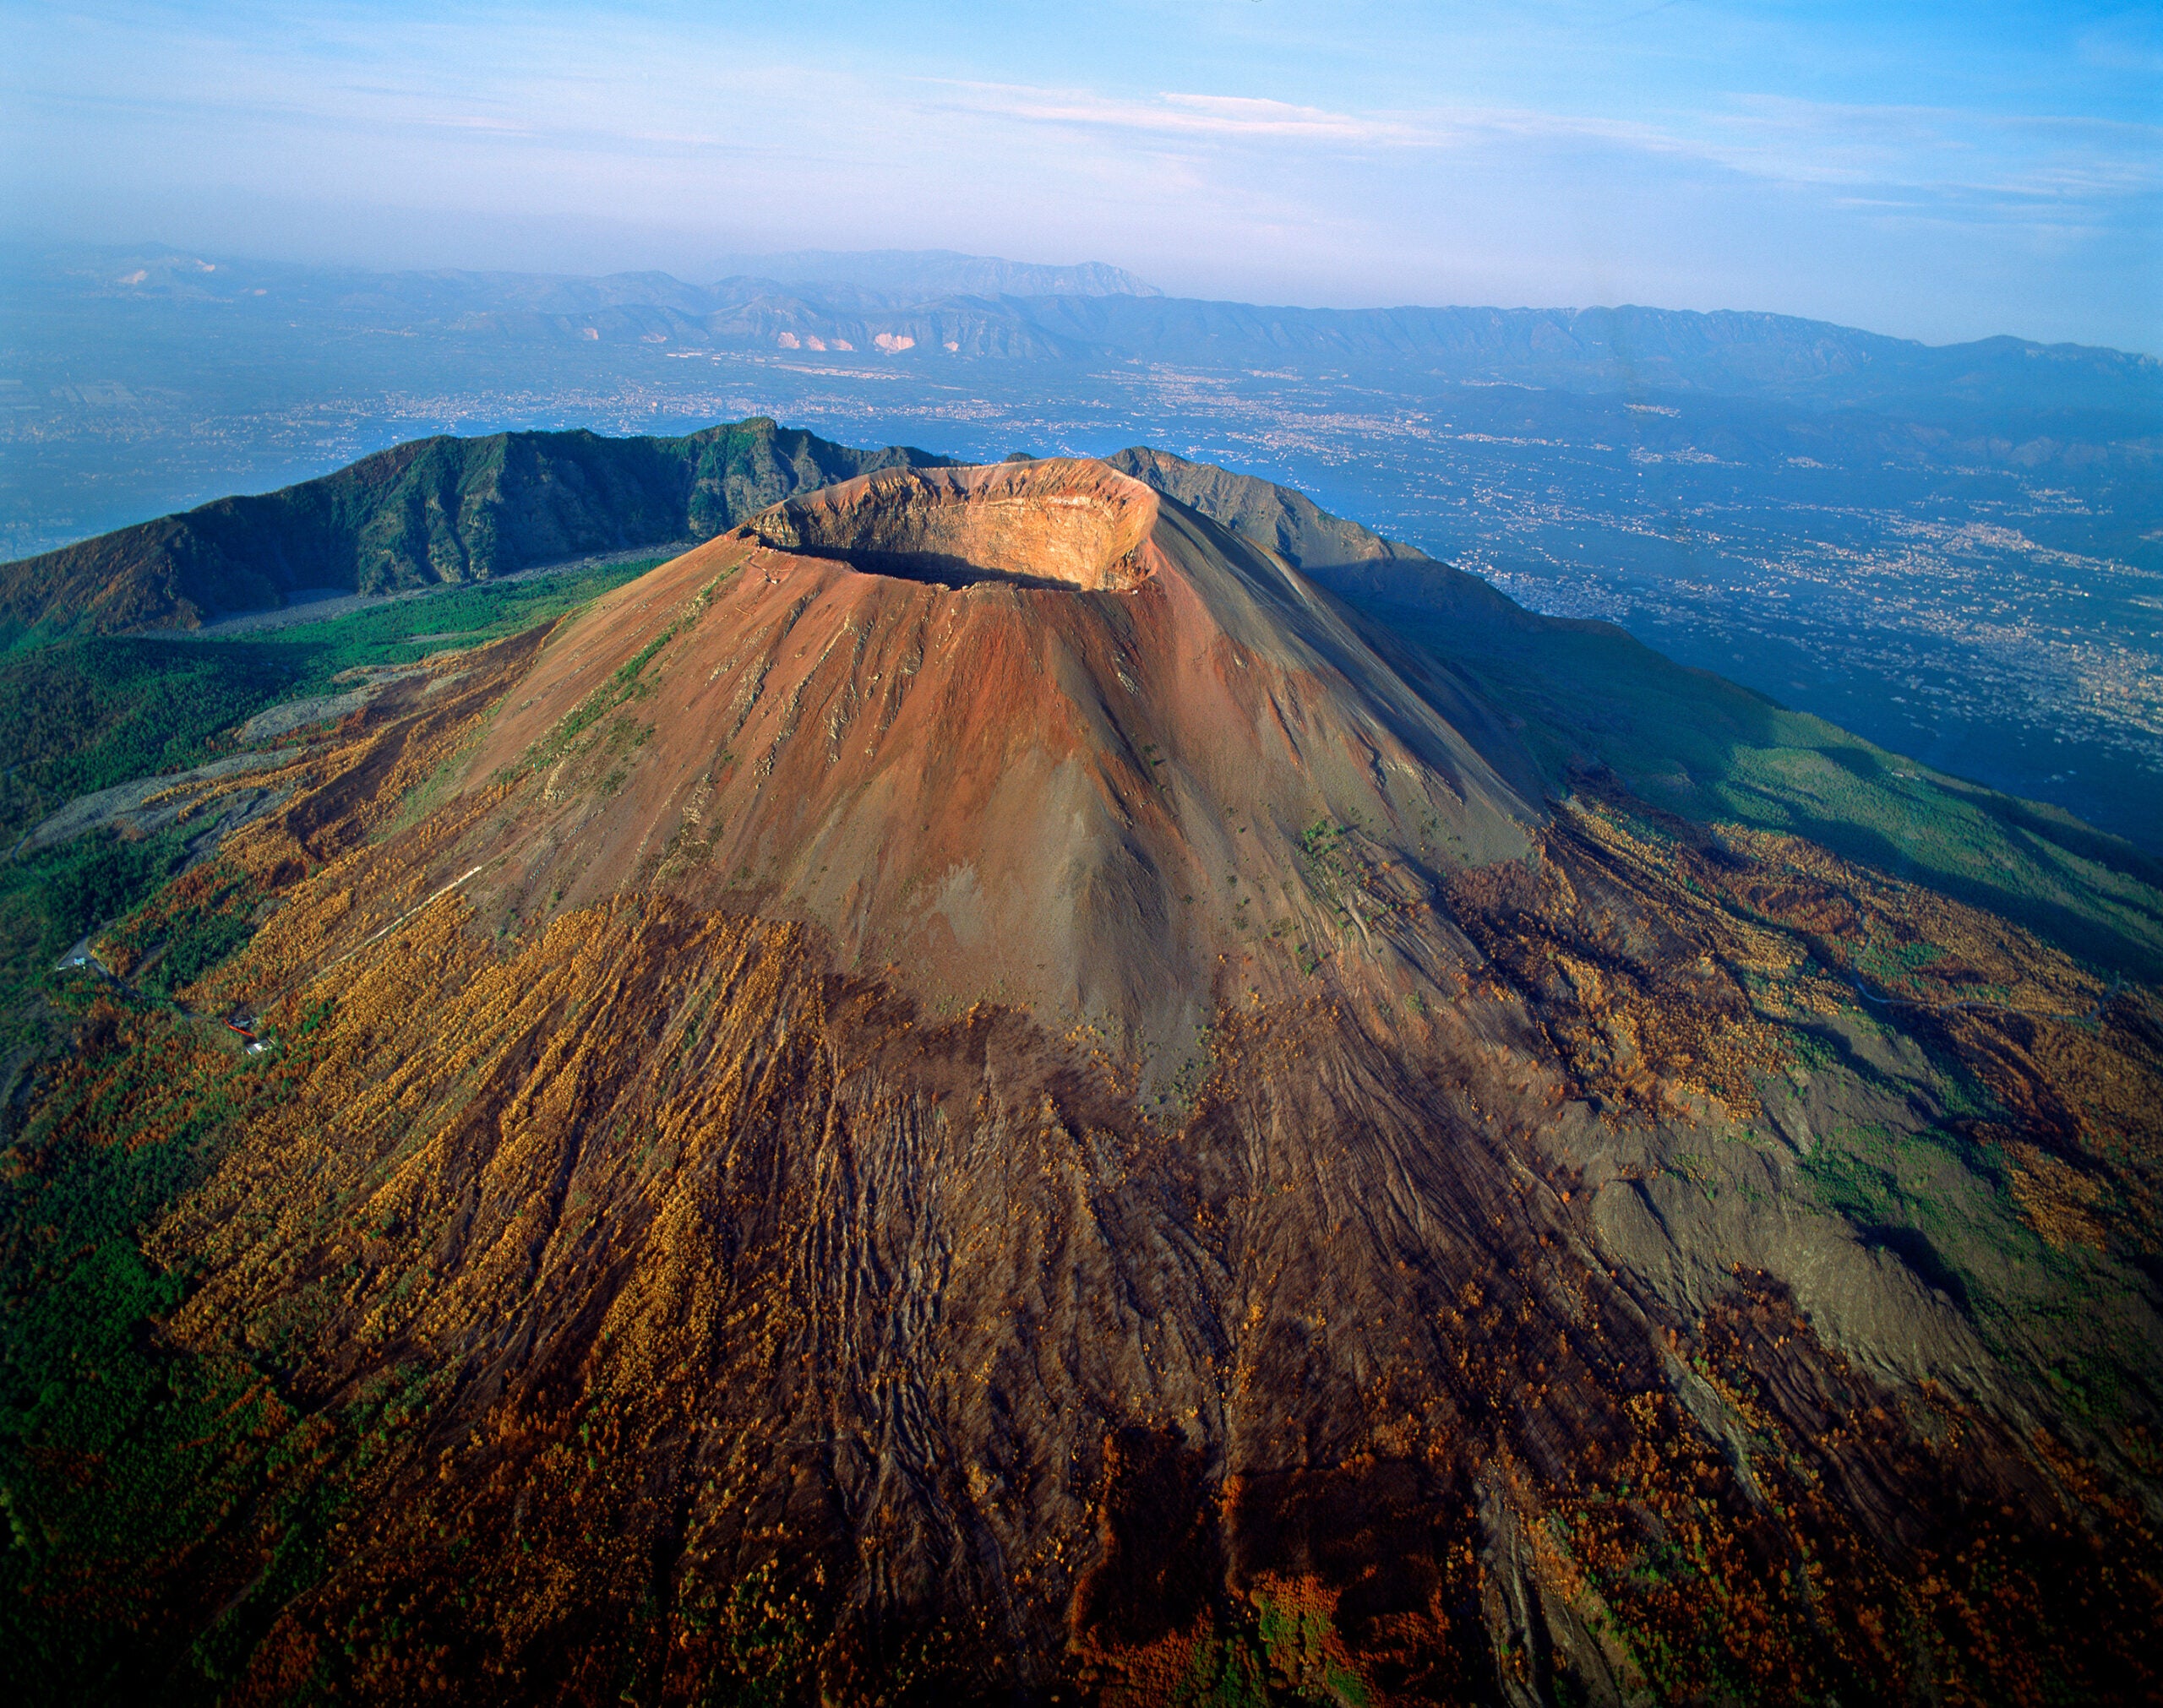 Photographer falls into Mount Vesuvius